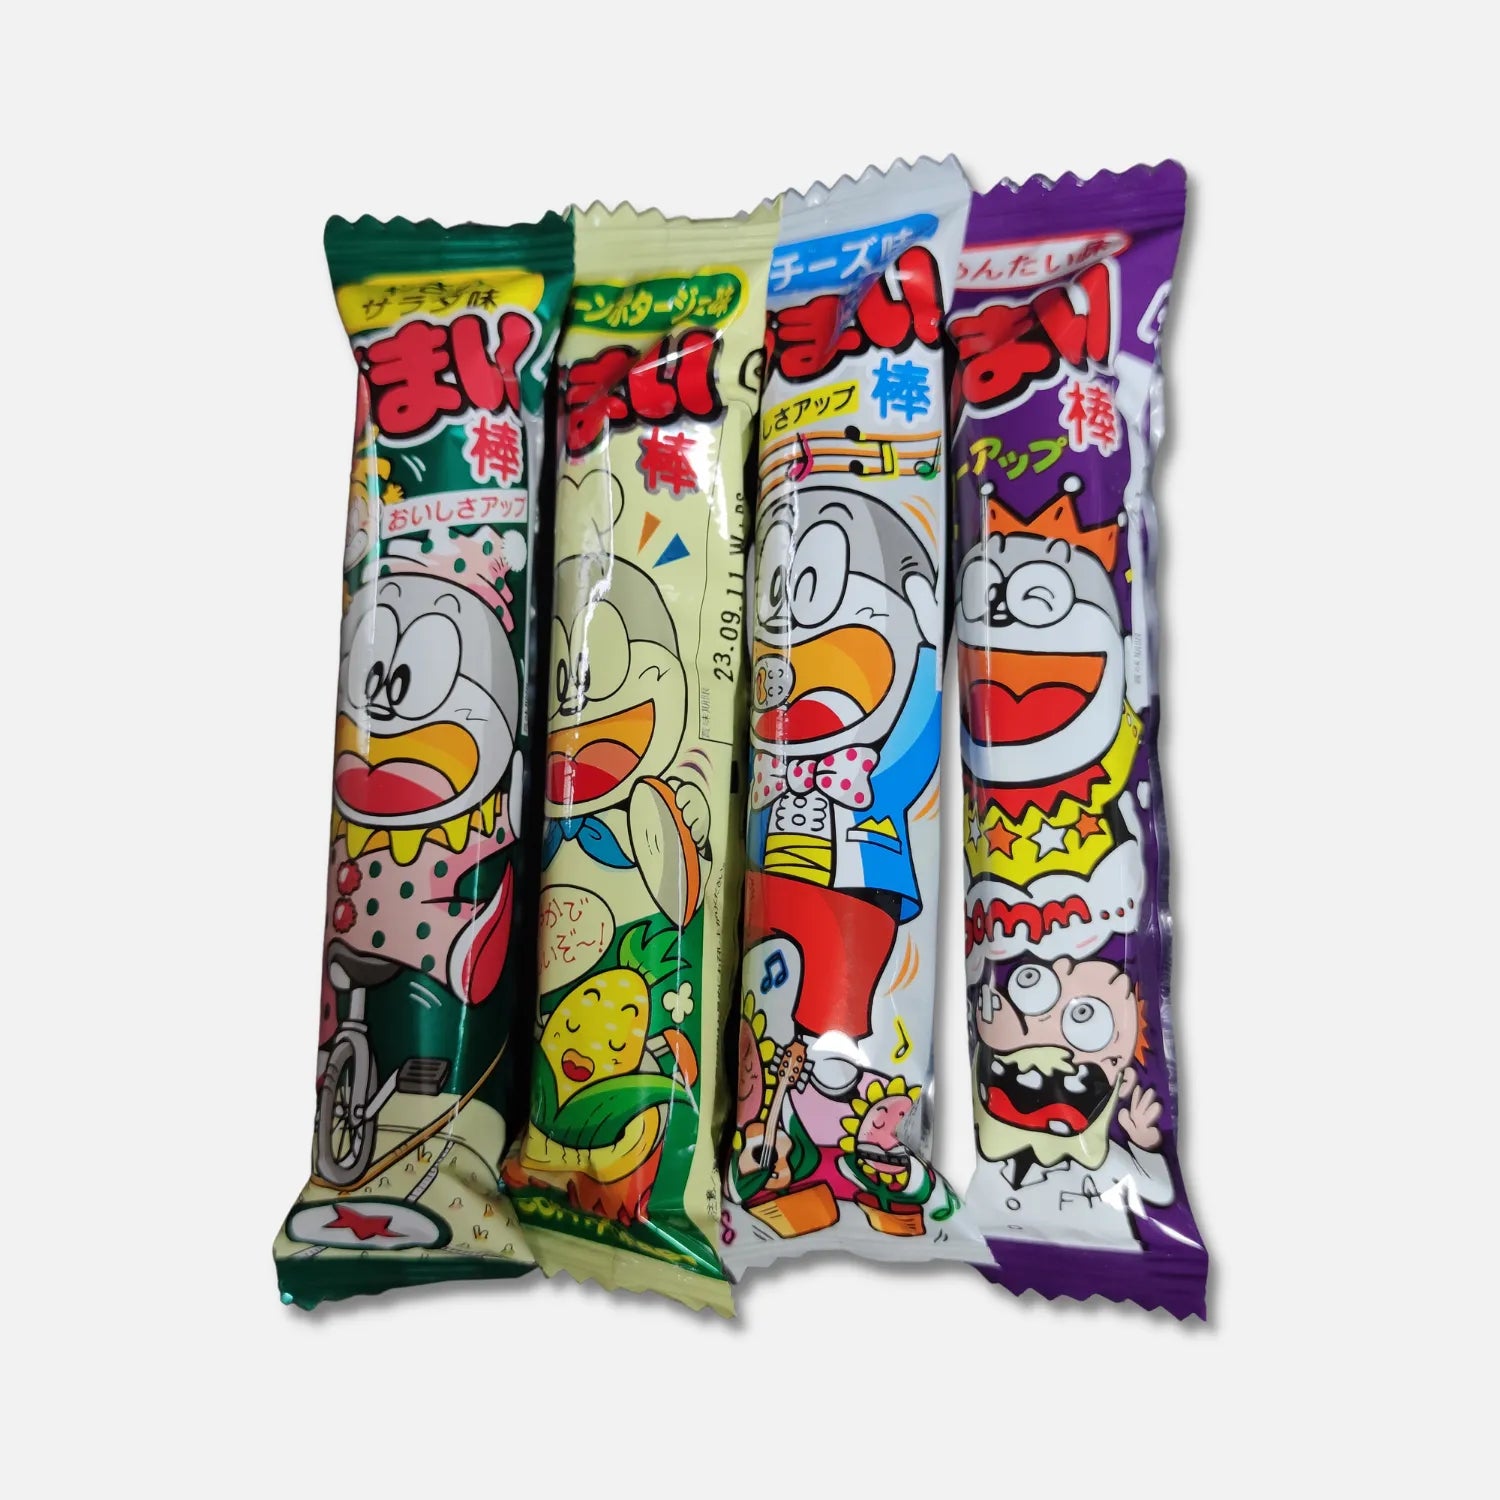 Yaokin 4 Flavor Mixed Snacks 6g (4 Units)